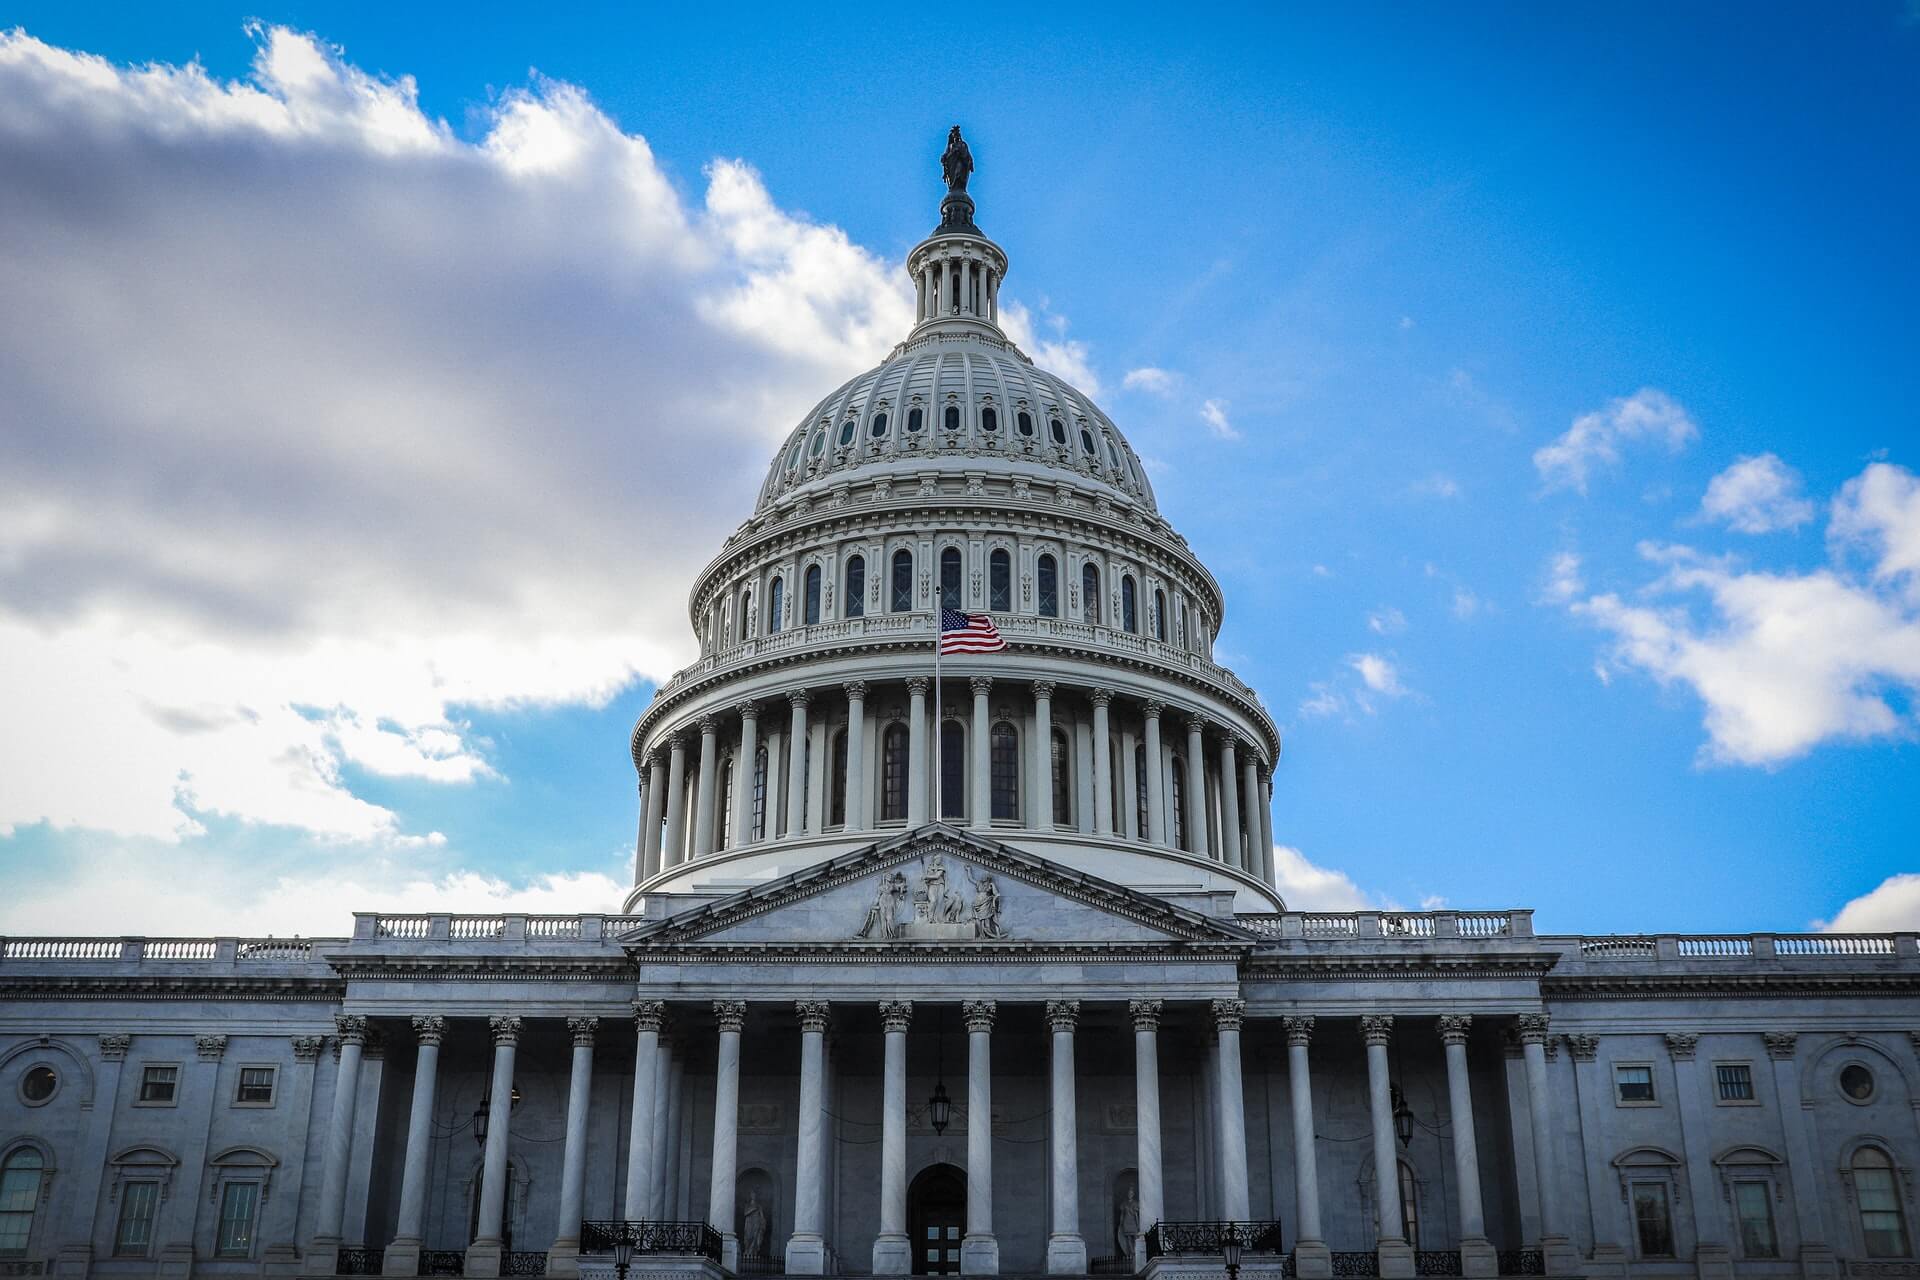 U.S. Capitol Building exterior, cloudy blue skies